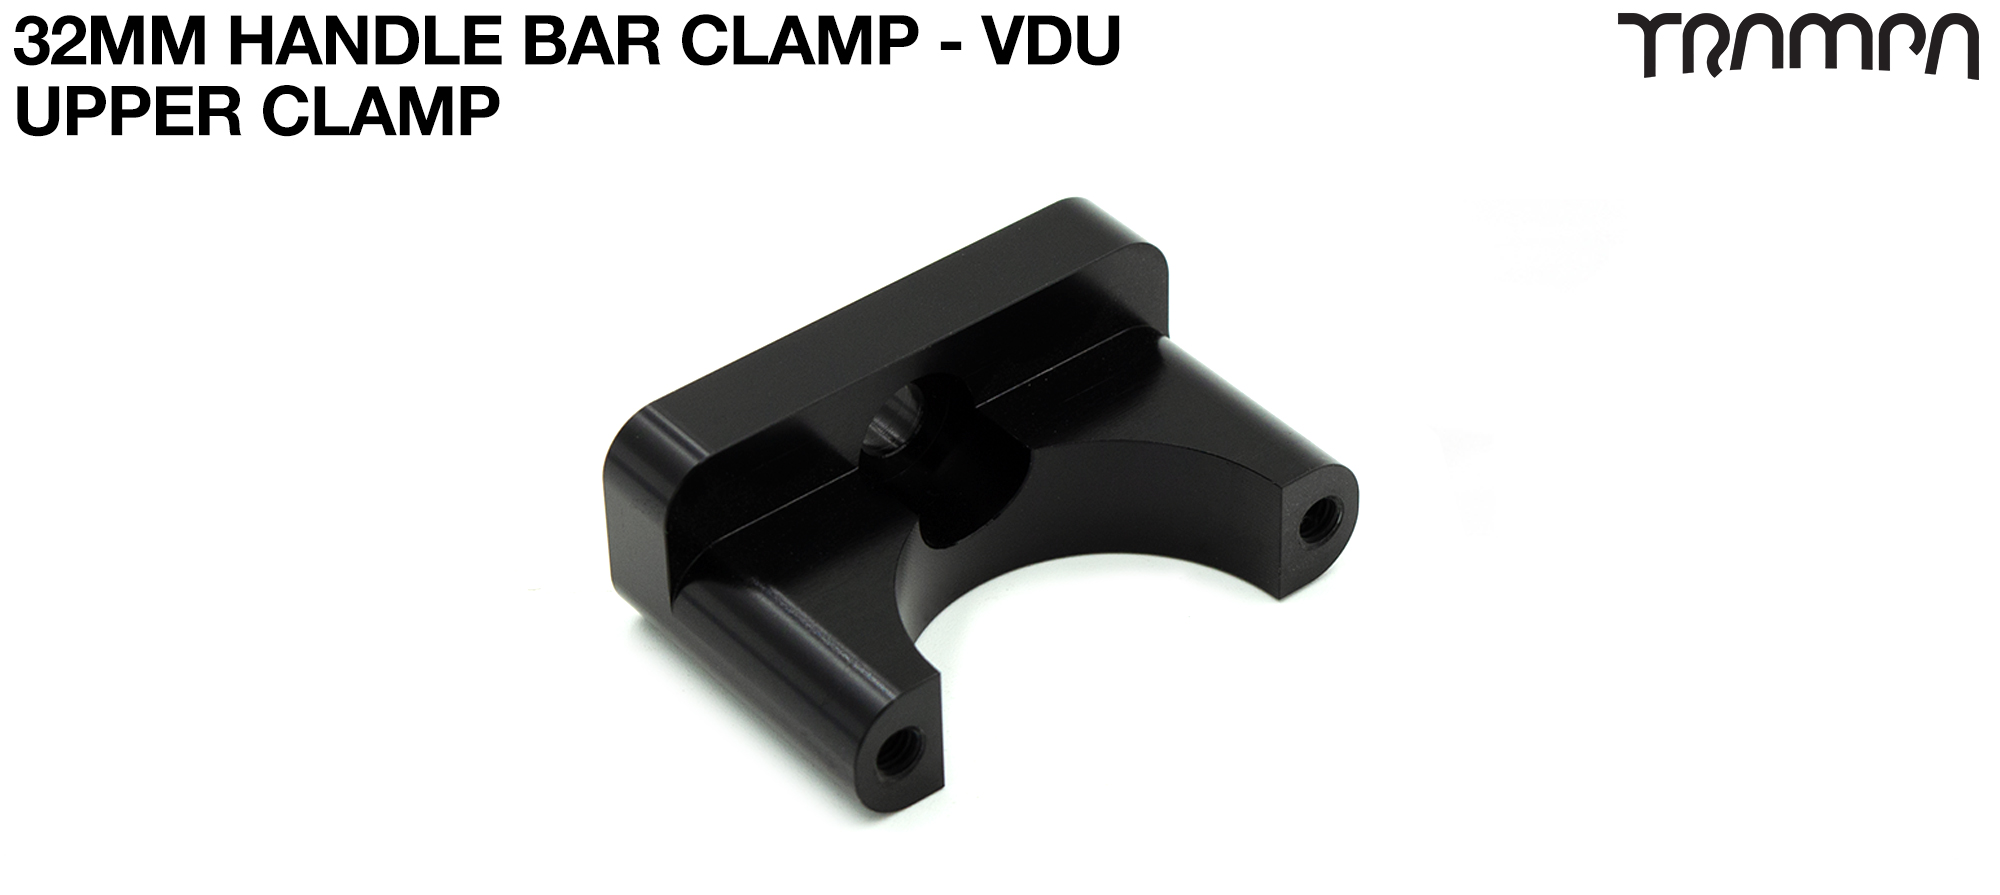 VESC DISPLAY UNIT - Upper Clamp for 32mm Handle Bars